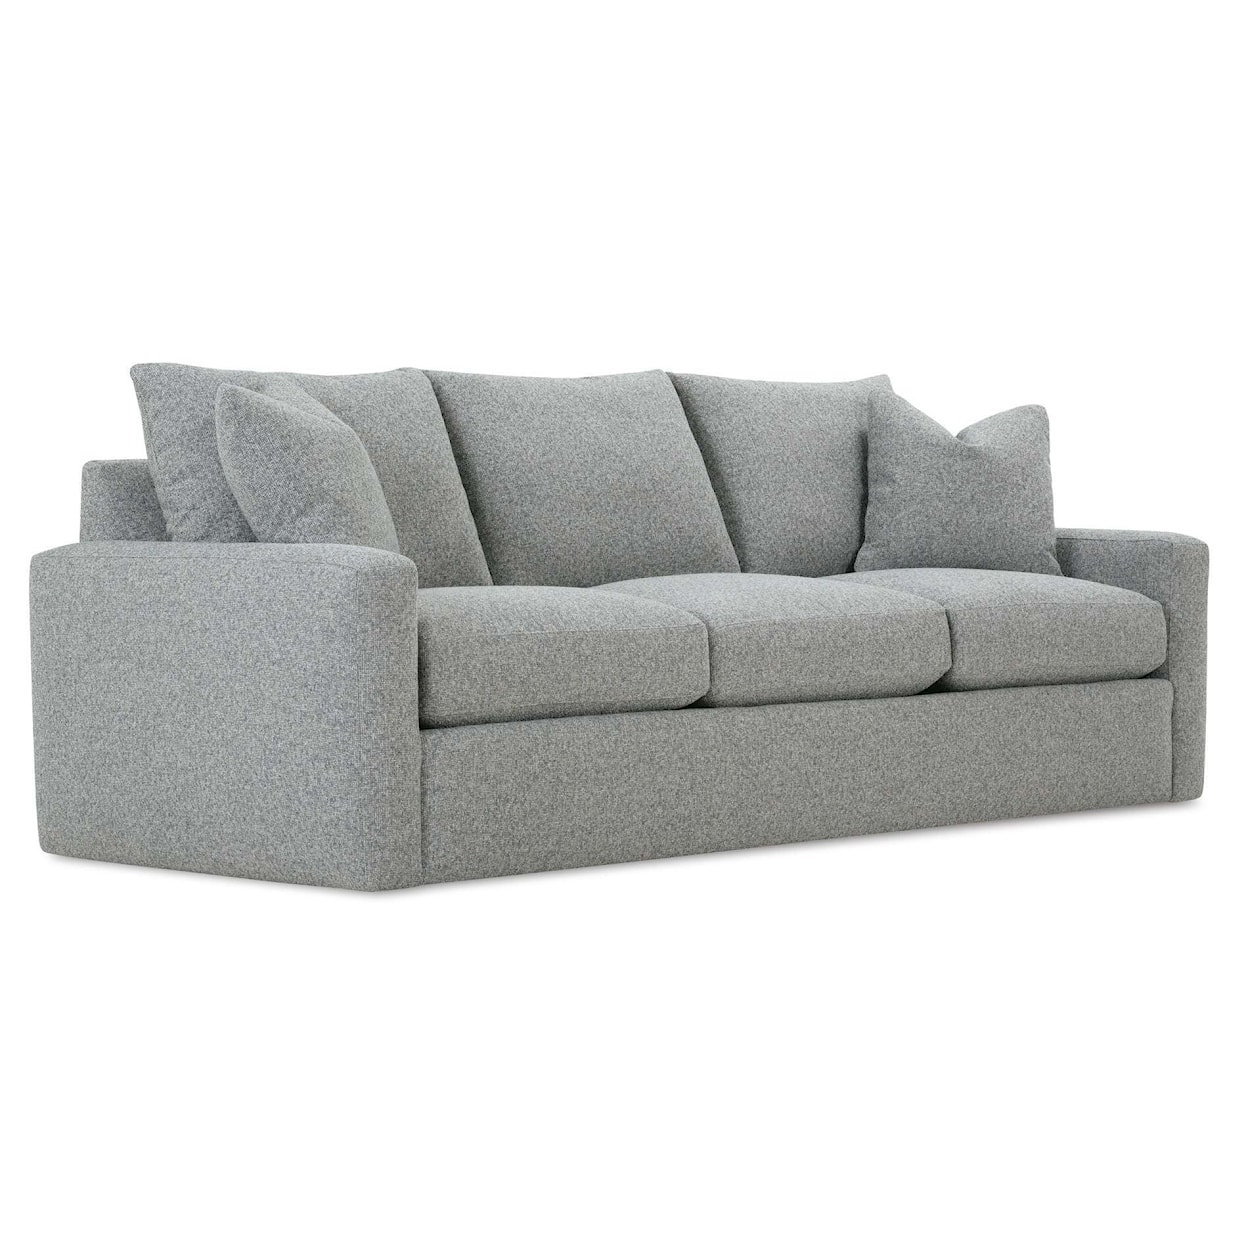 Rowe Alden Three Cushion Sofa